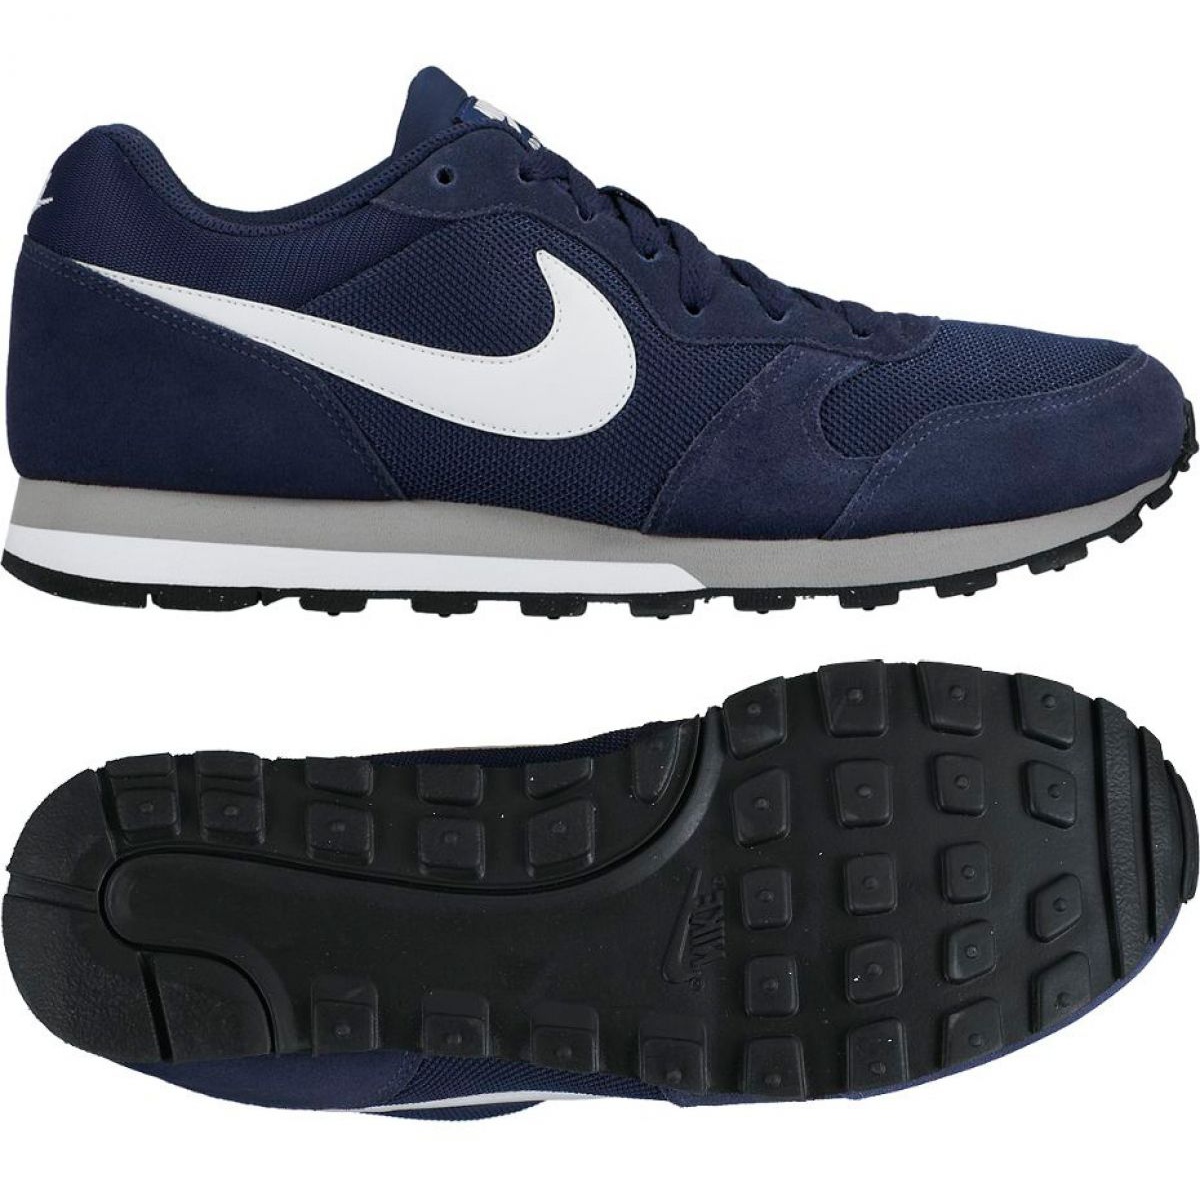 Nike Md Runner 2 M 749794-410 shoe navy blue - KeeShoes